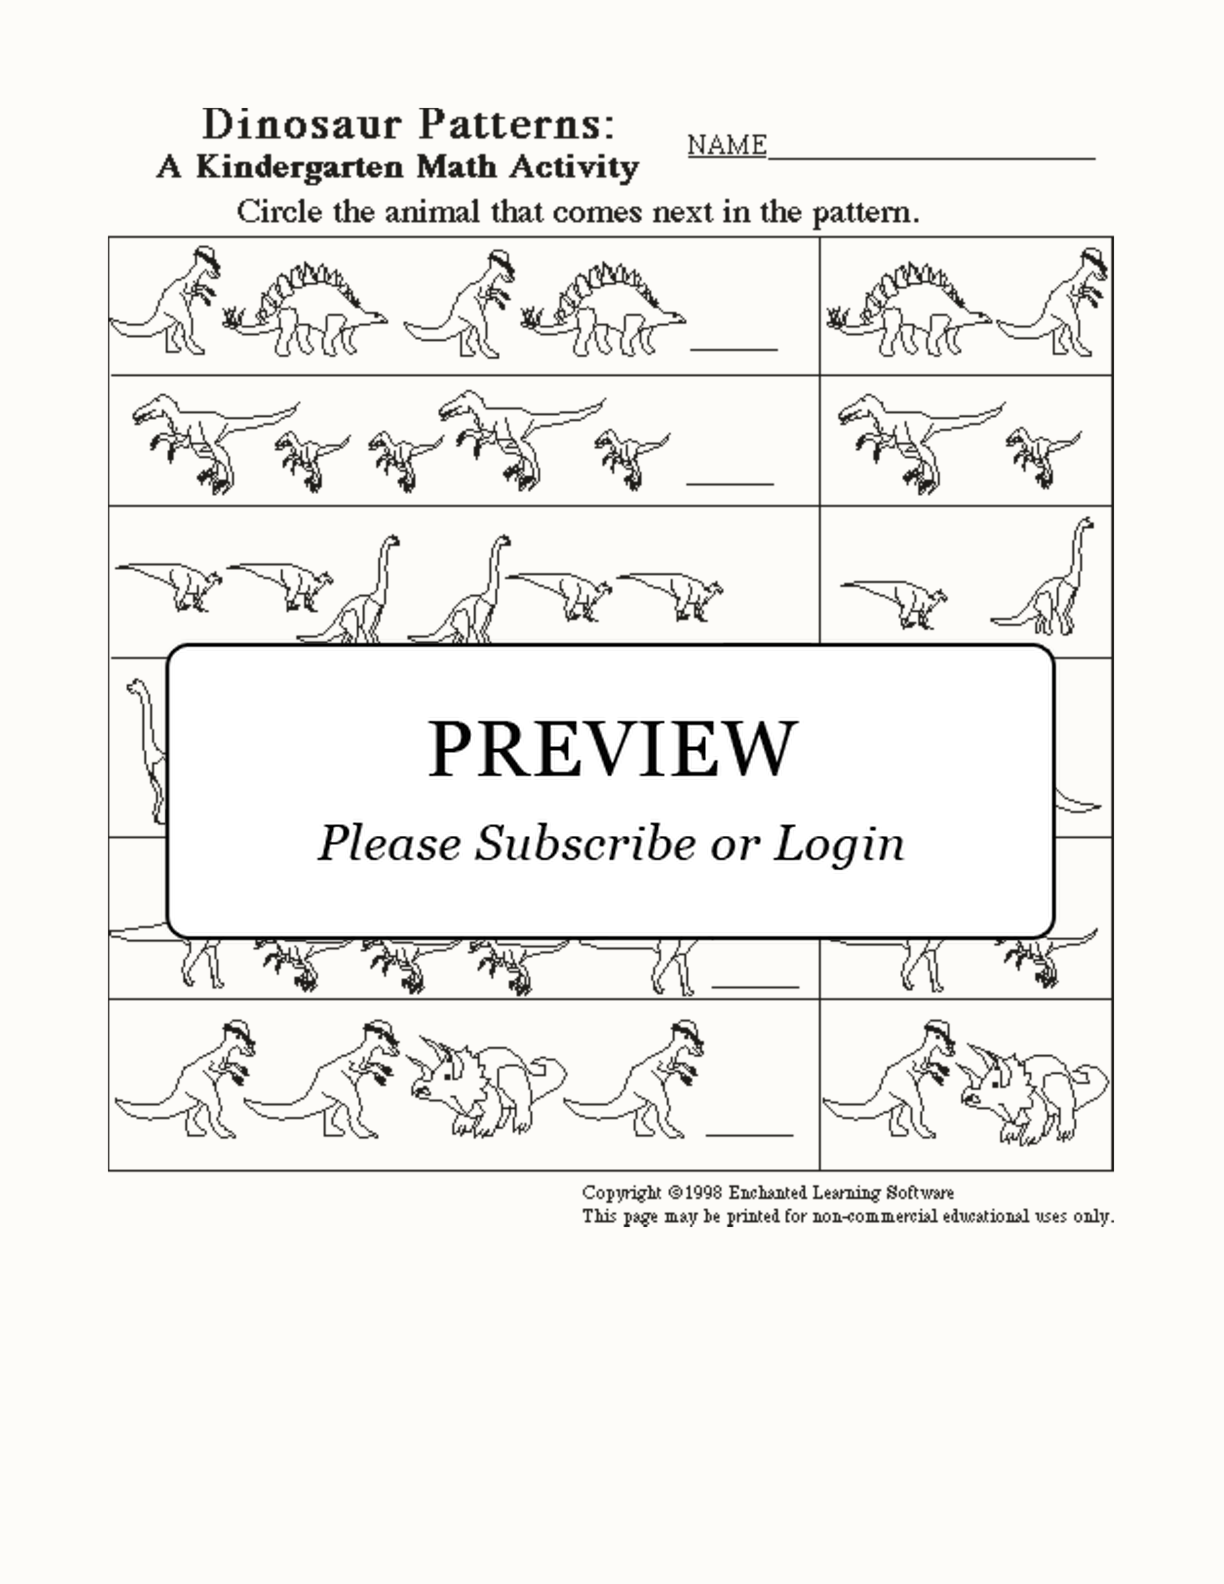 Dinosaur Patterns interactive worksheet page 1